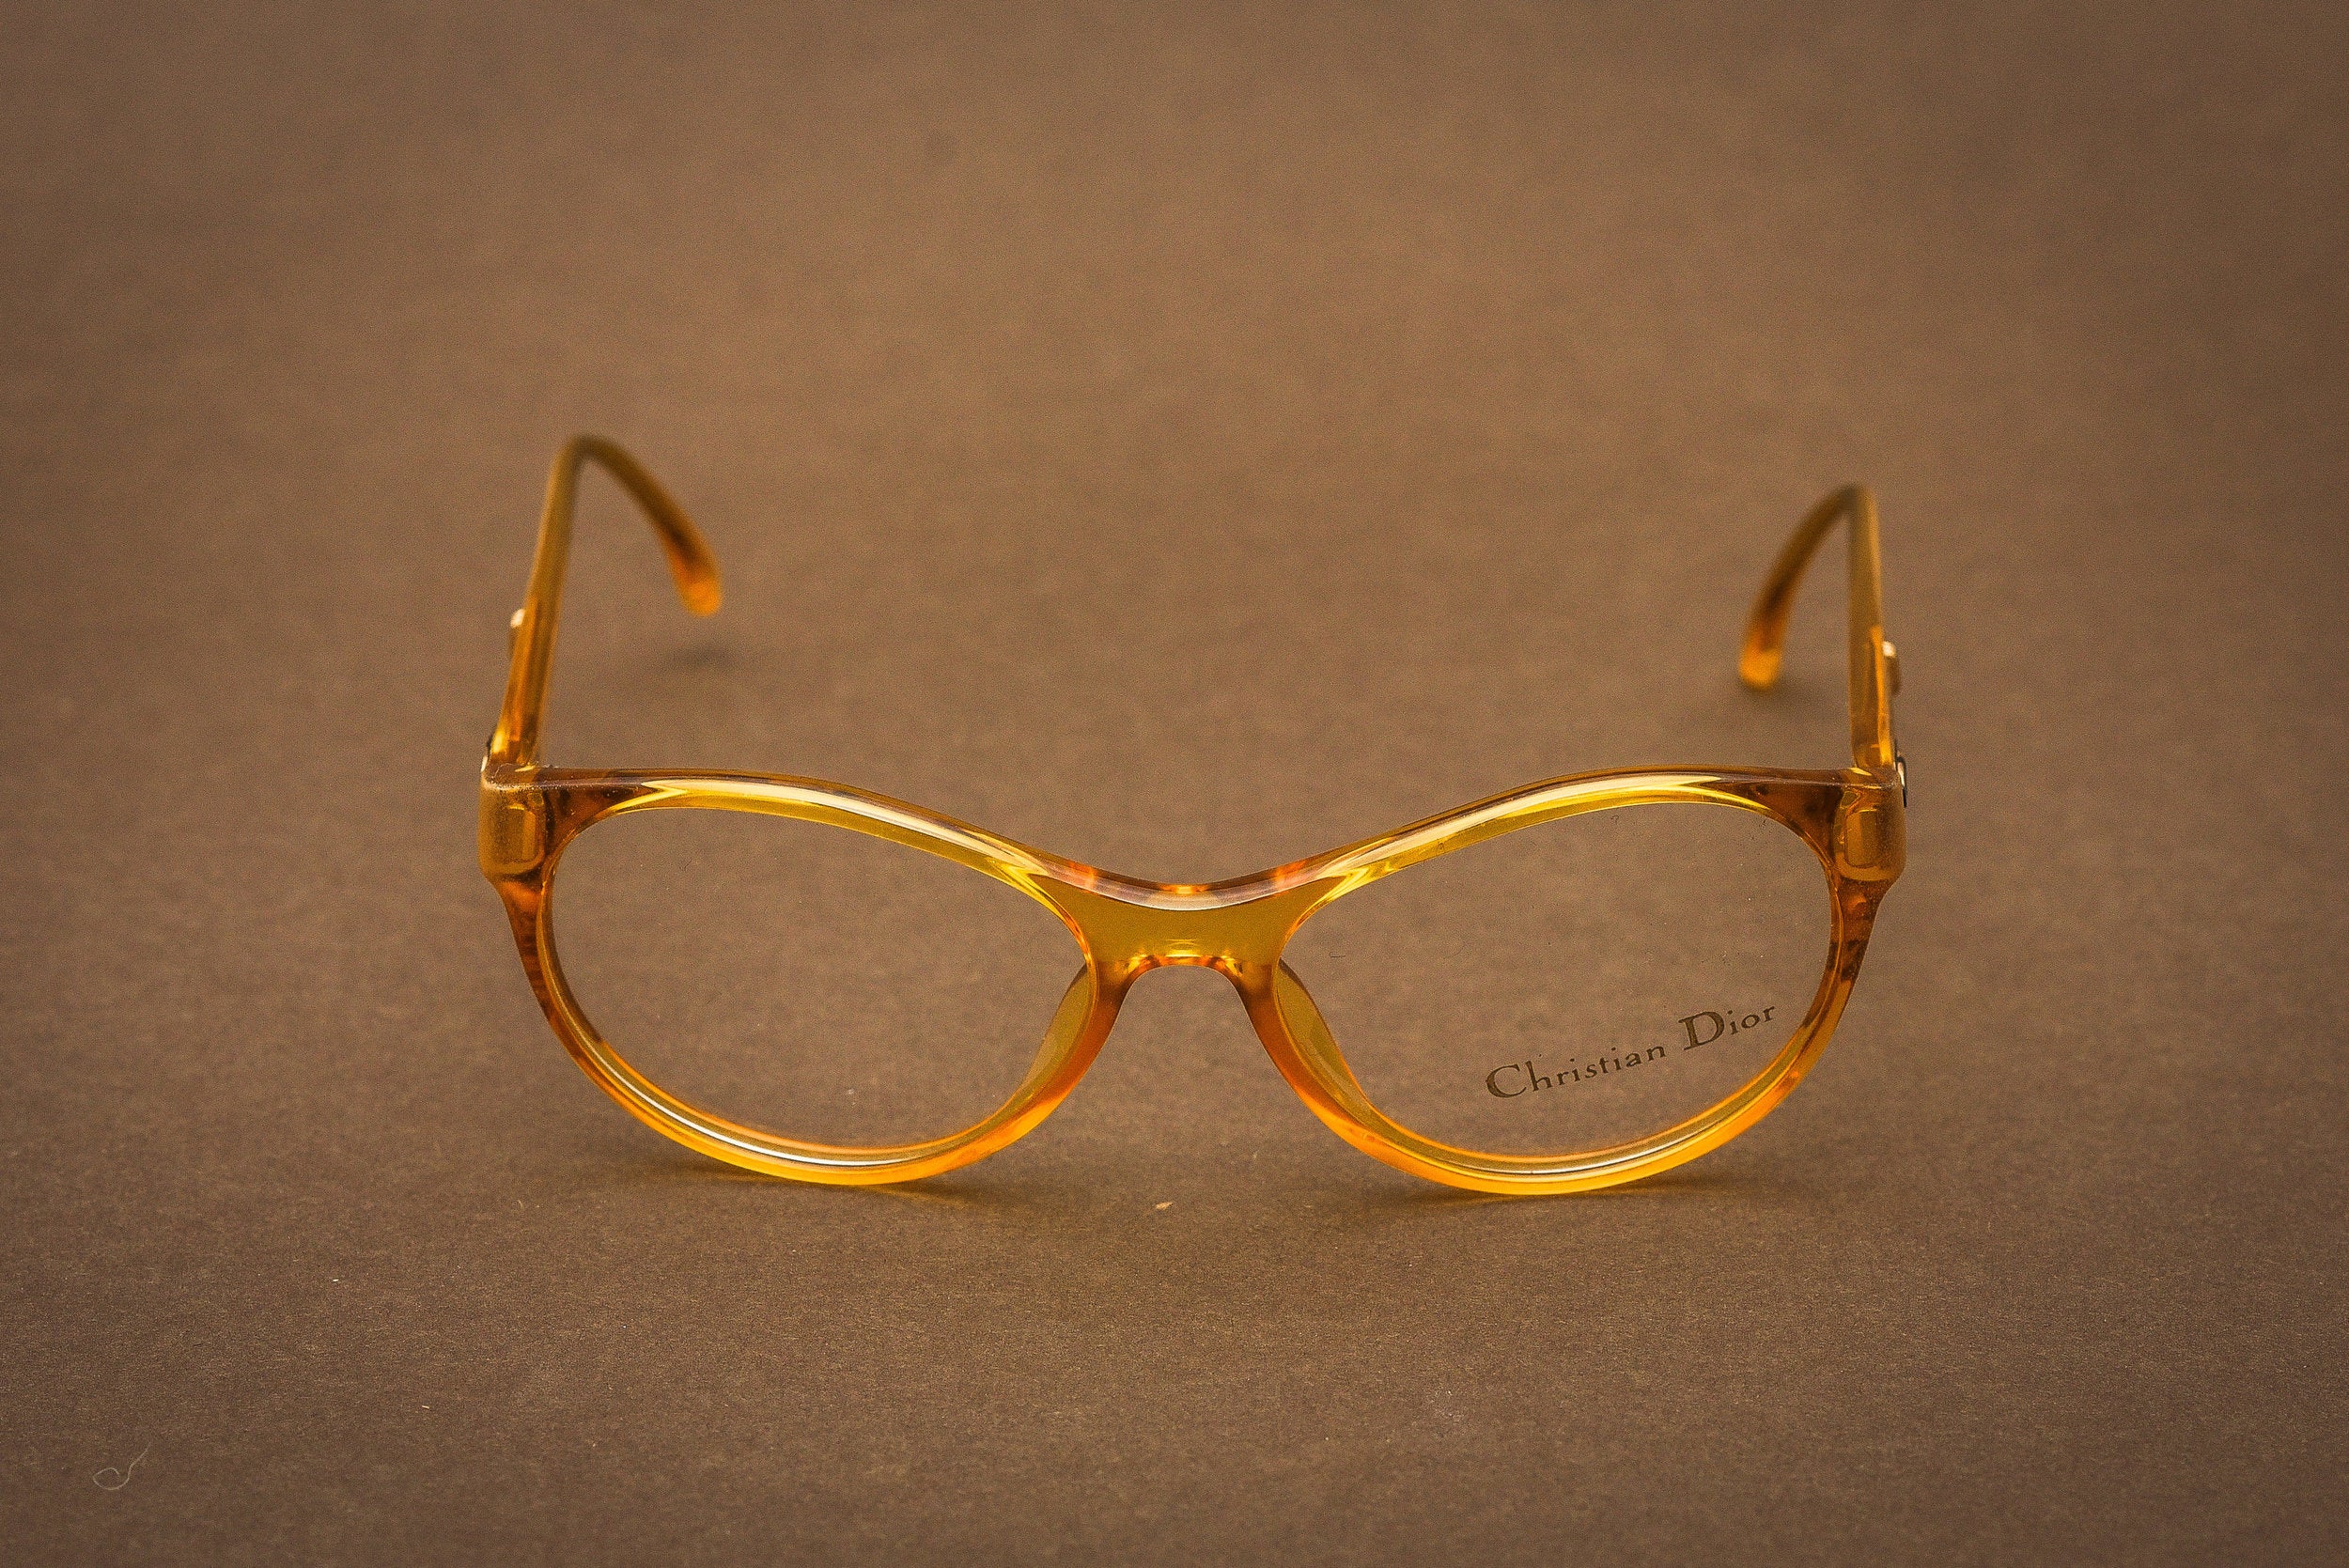 Christian Dior 2704 glasses